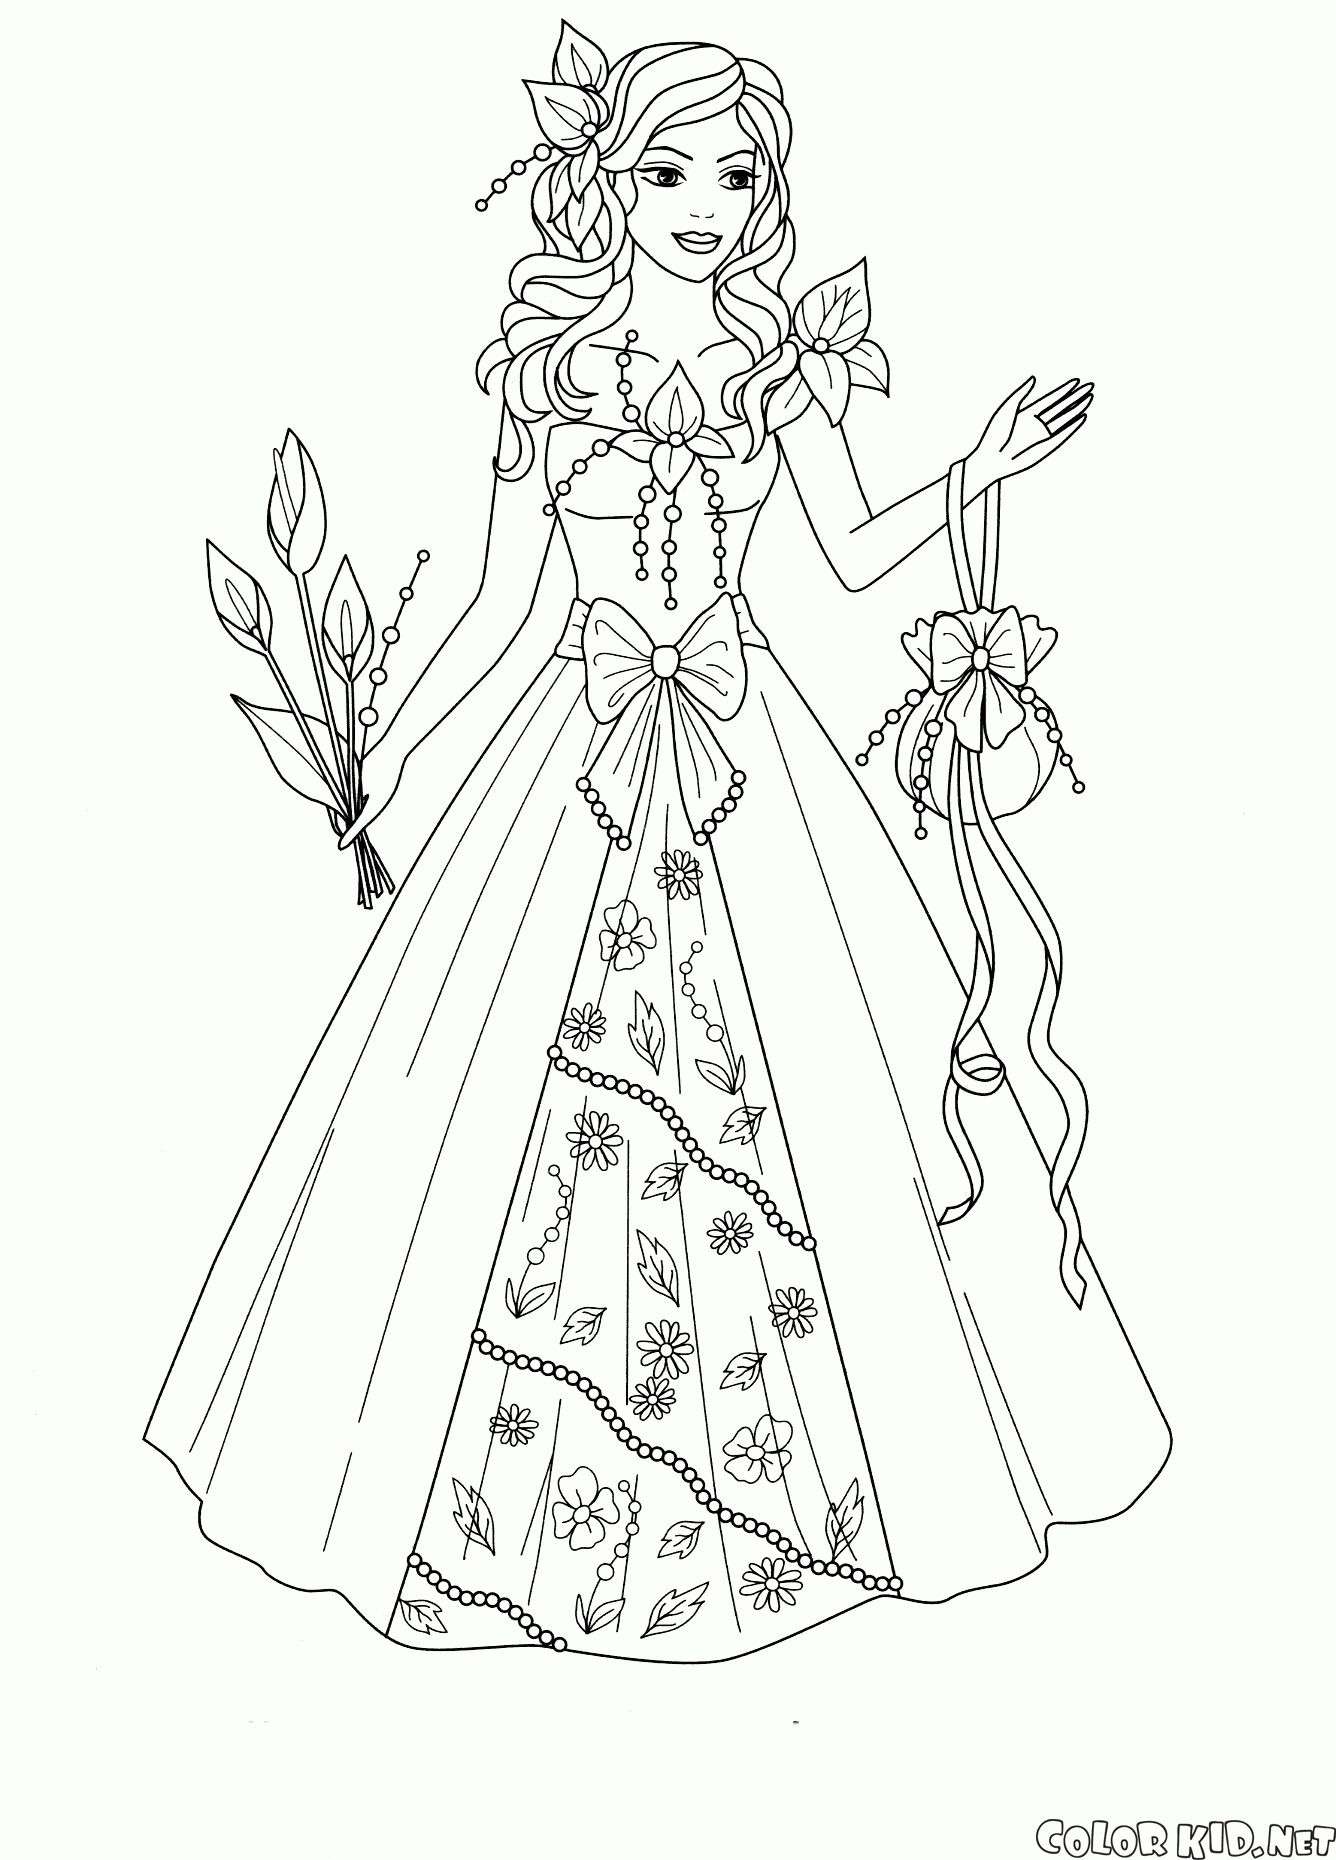 A princesa do reino de flores